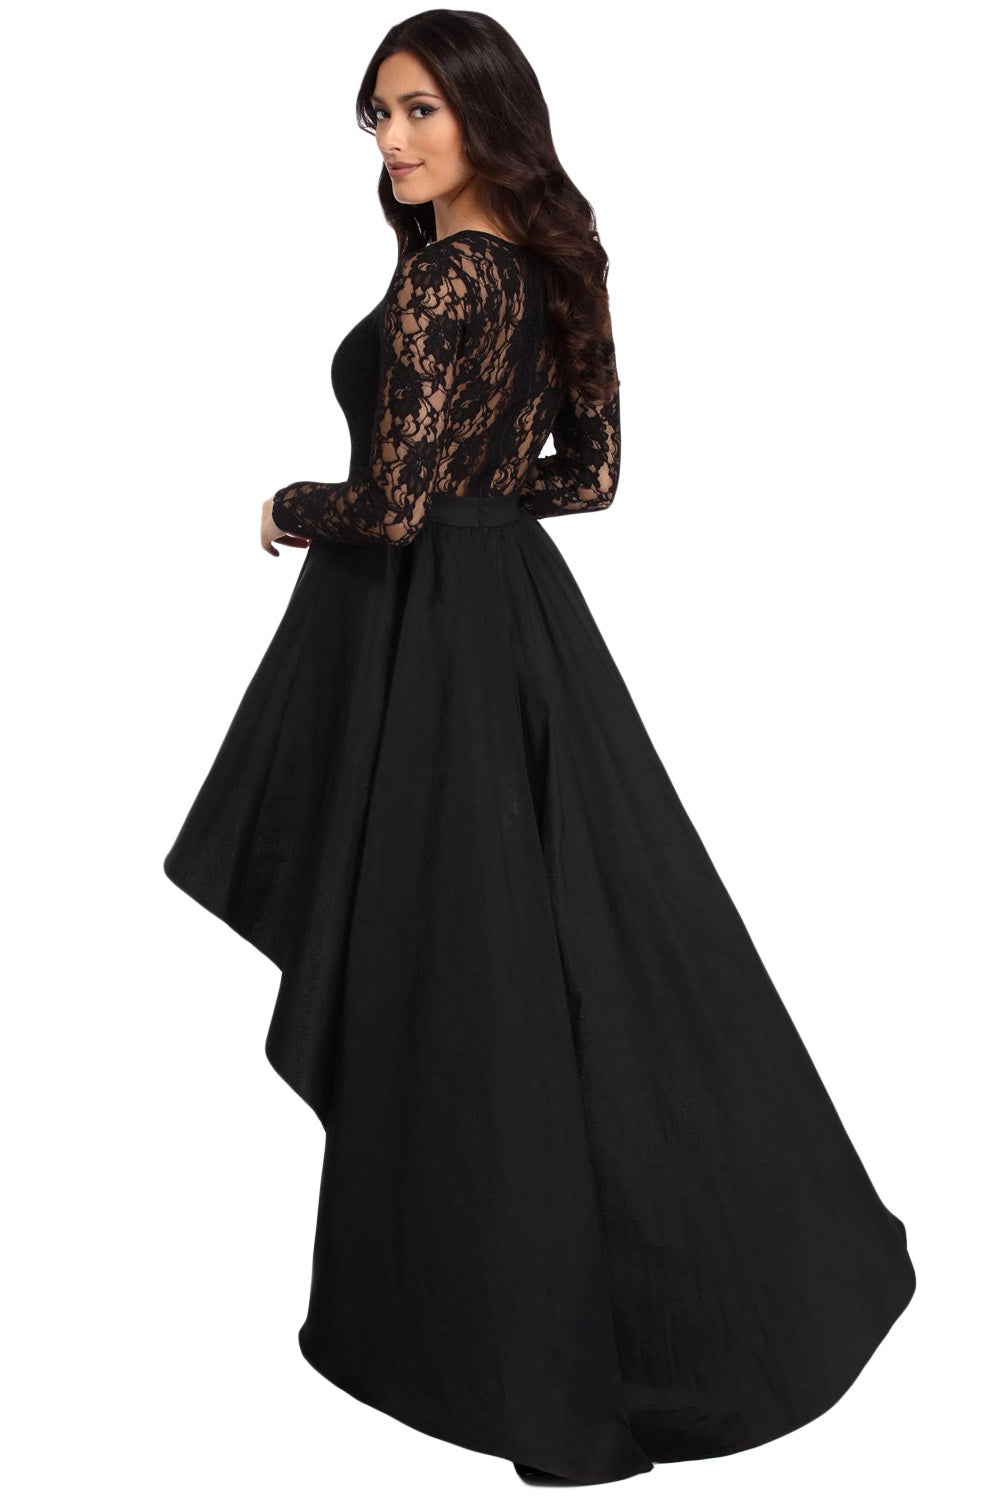 Maxi Dress Lace See Through Boho Dress Bell Sleeve Long Prom Dress